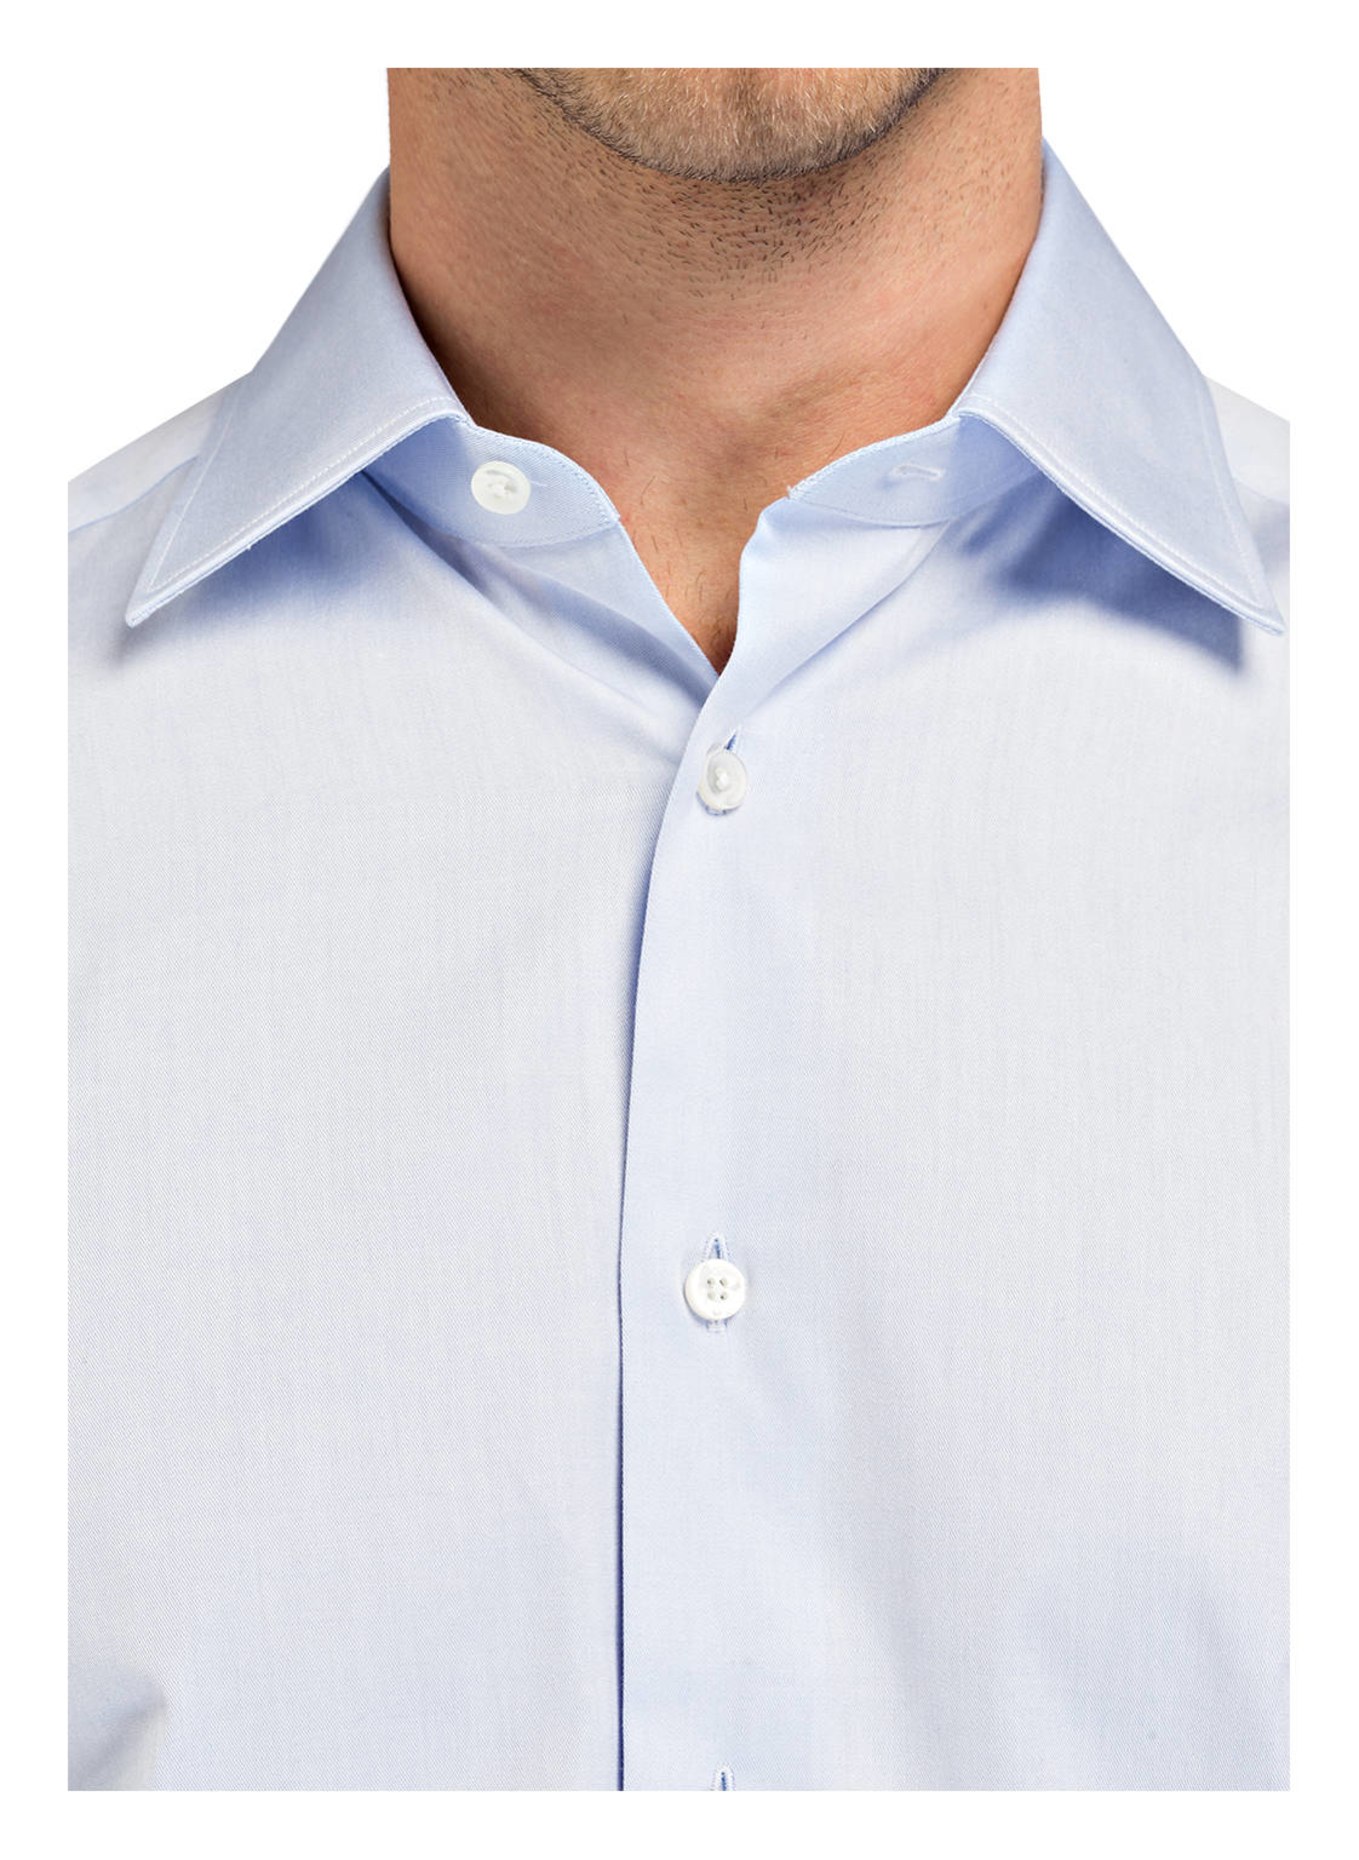 ZEGNA Shirt tailored fit, Color: LIGHT BLUE (Image 4)